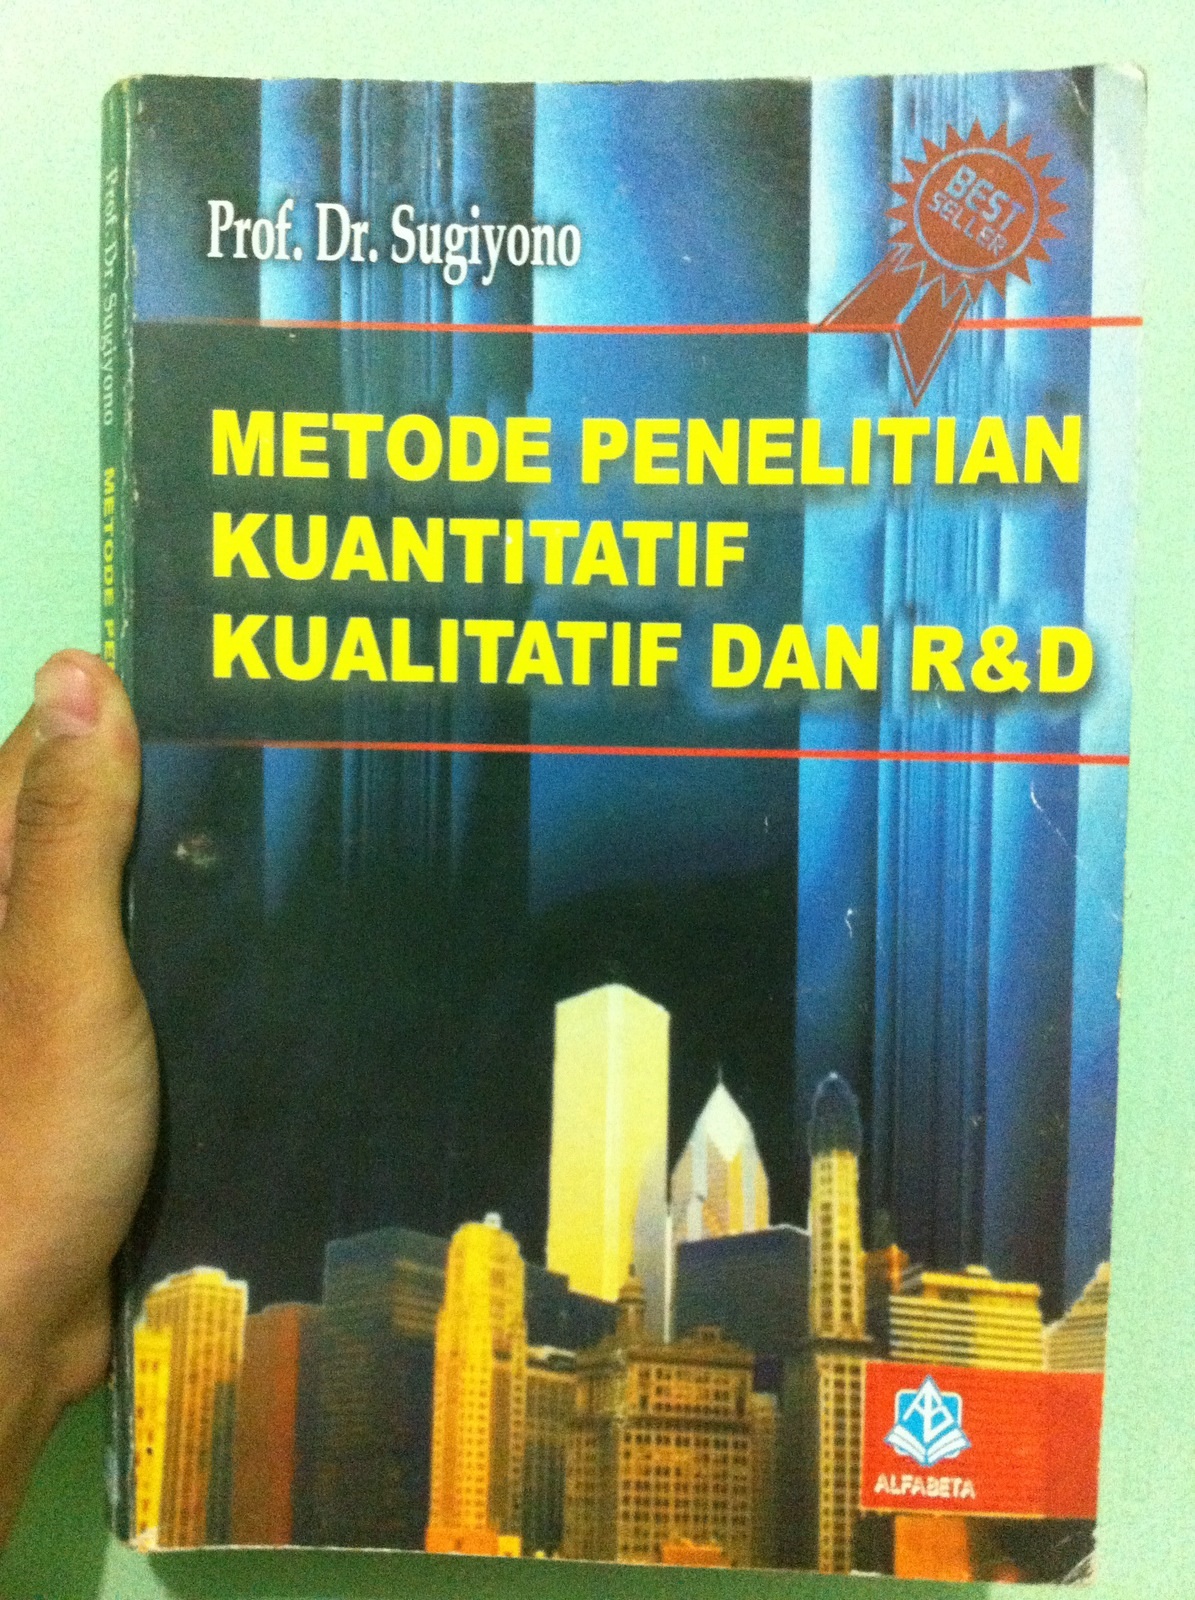 Download buku metode penelitian karya sugiyono